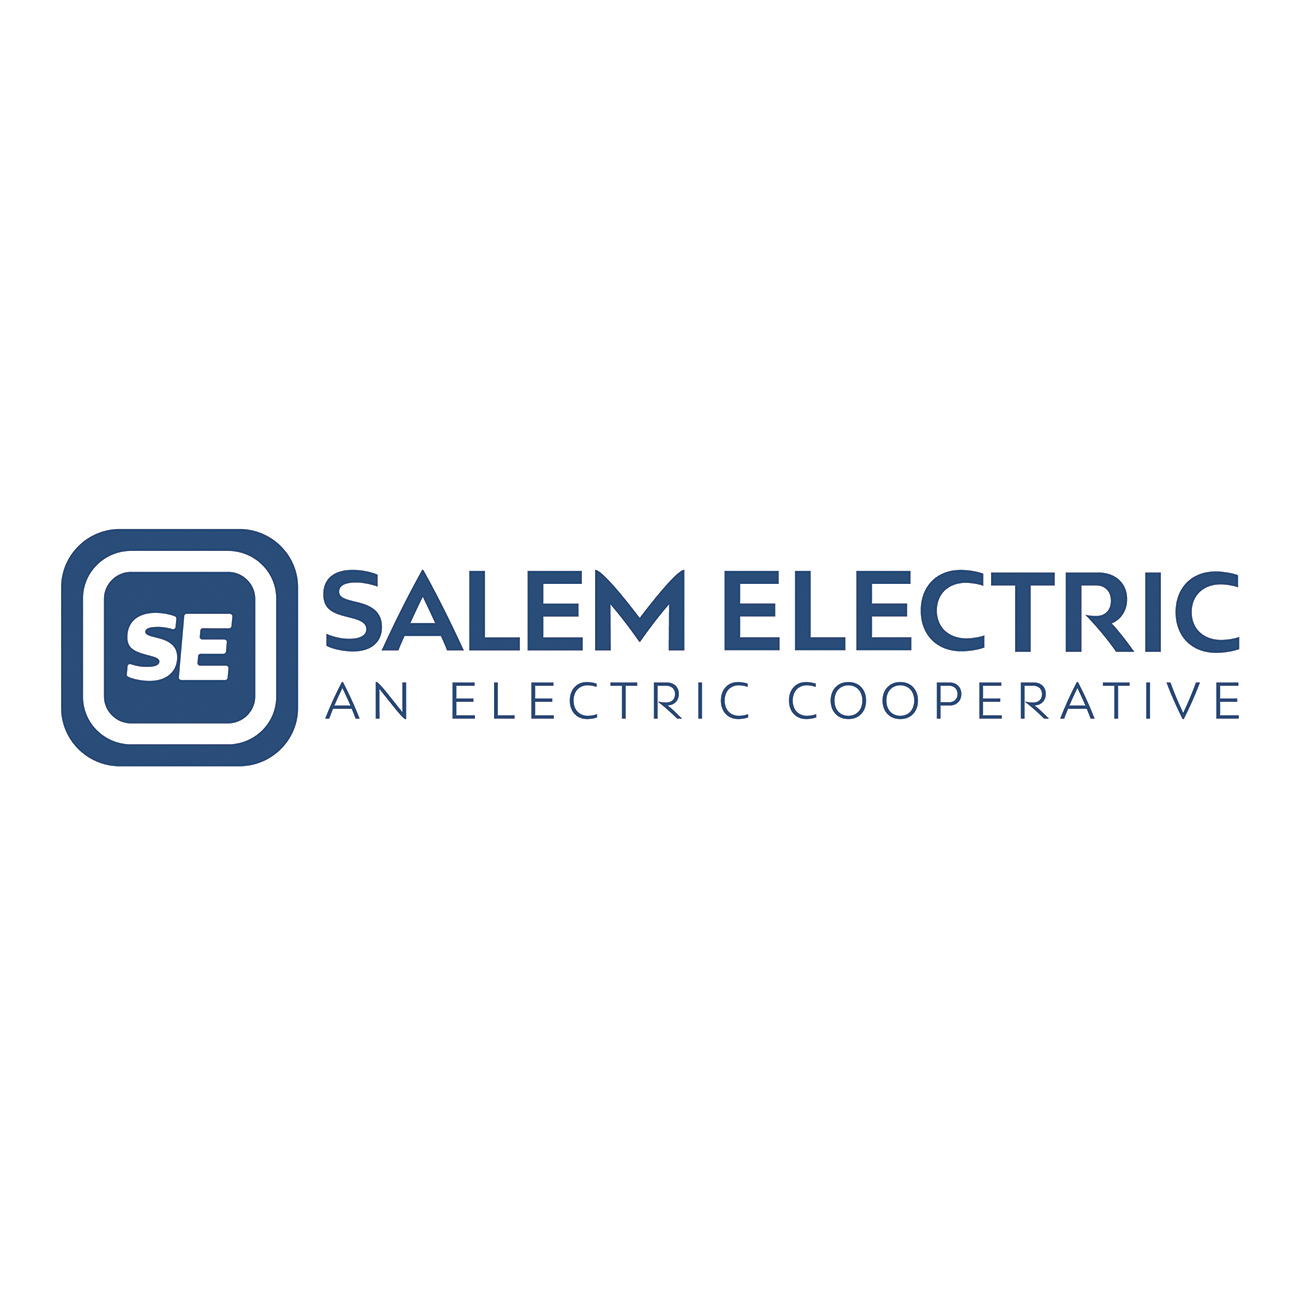 Salem Electric Logo Horizontal